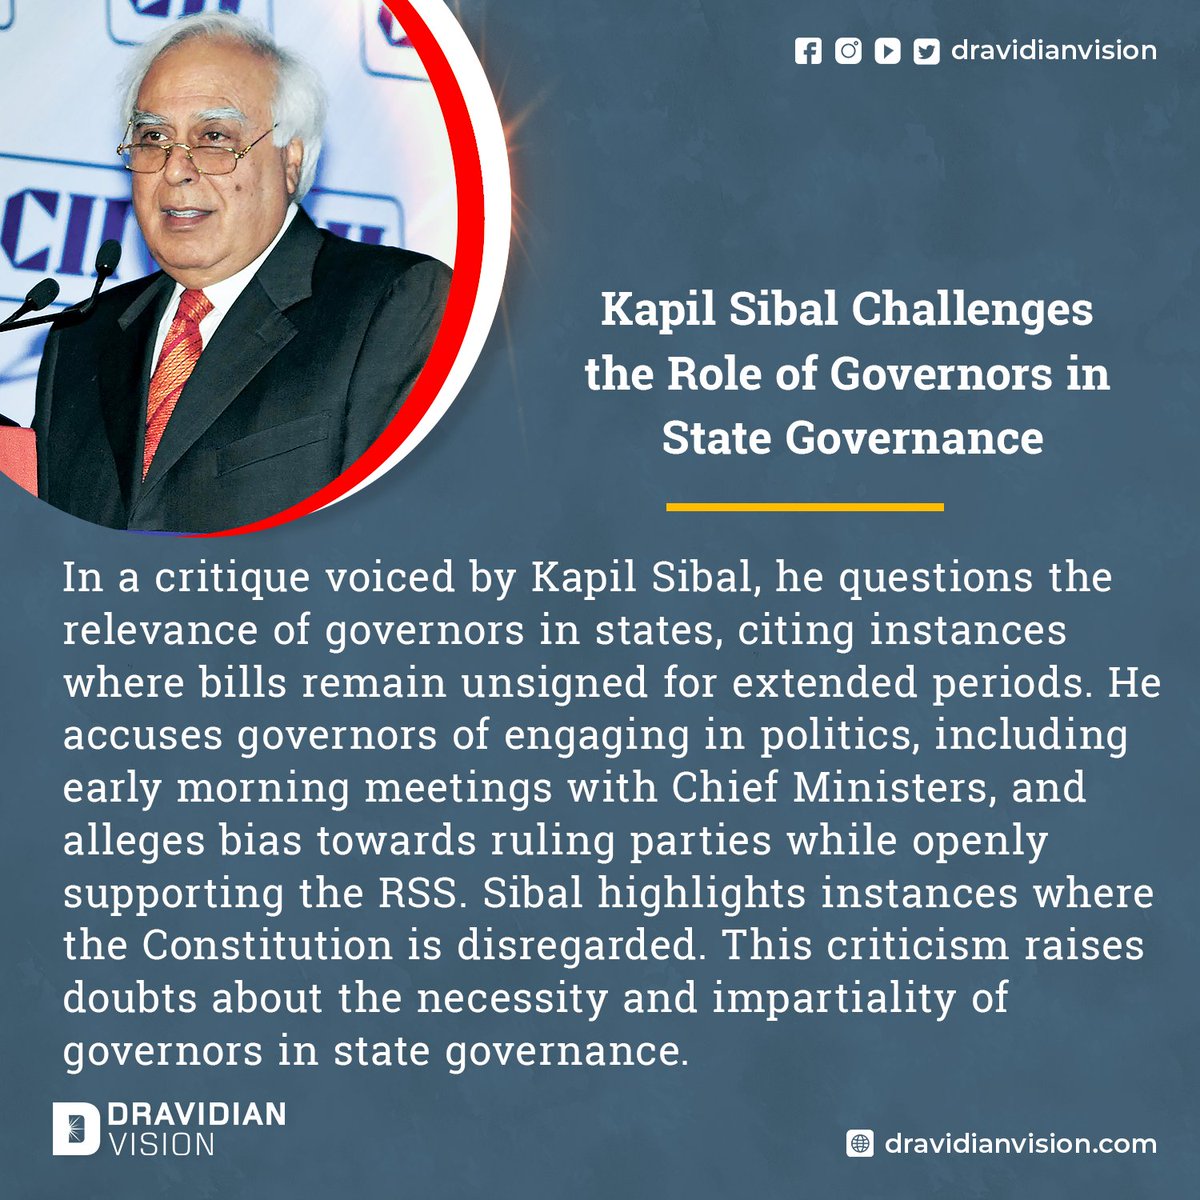 Kapil Sibal Challenges the Role of Governors in State Governance: Allegations of Political Bias and Constitutional Disregard 

#KapilSibal #Governor #StateGovernance #DravidianVision